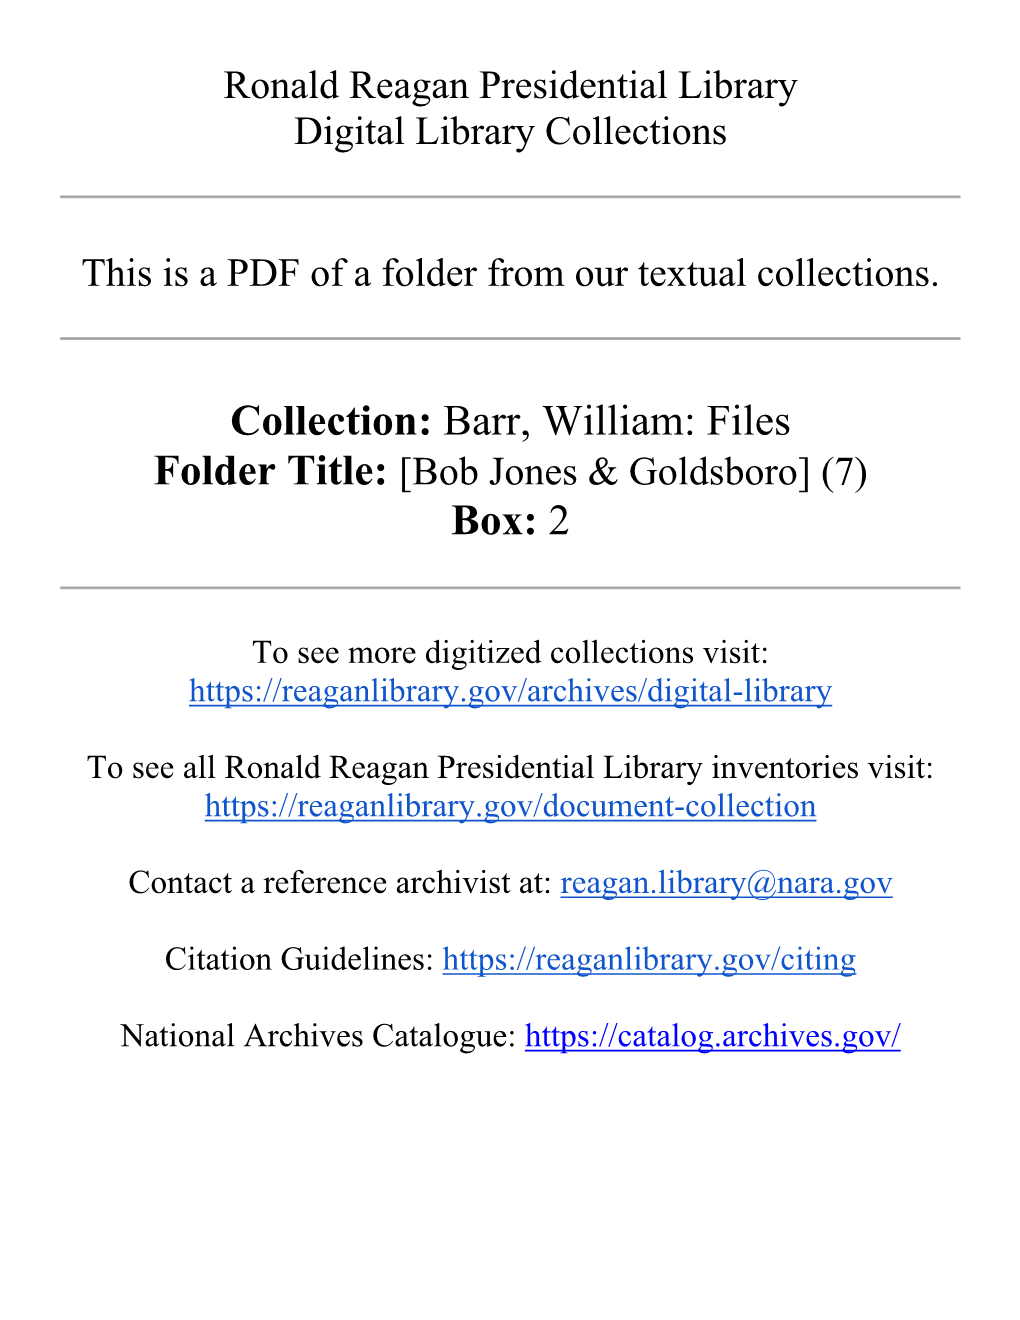 Barr, William: Files Folder Title: [Bob Jones & Goldsboro] (7)